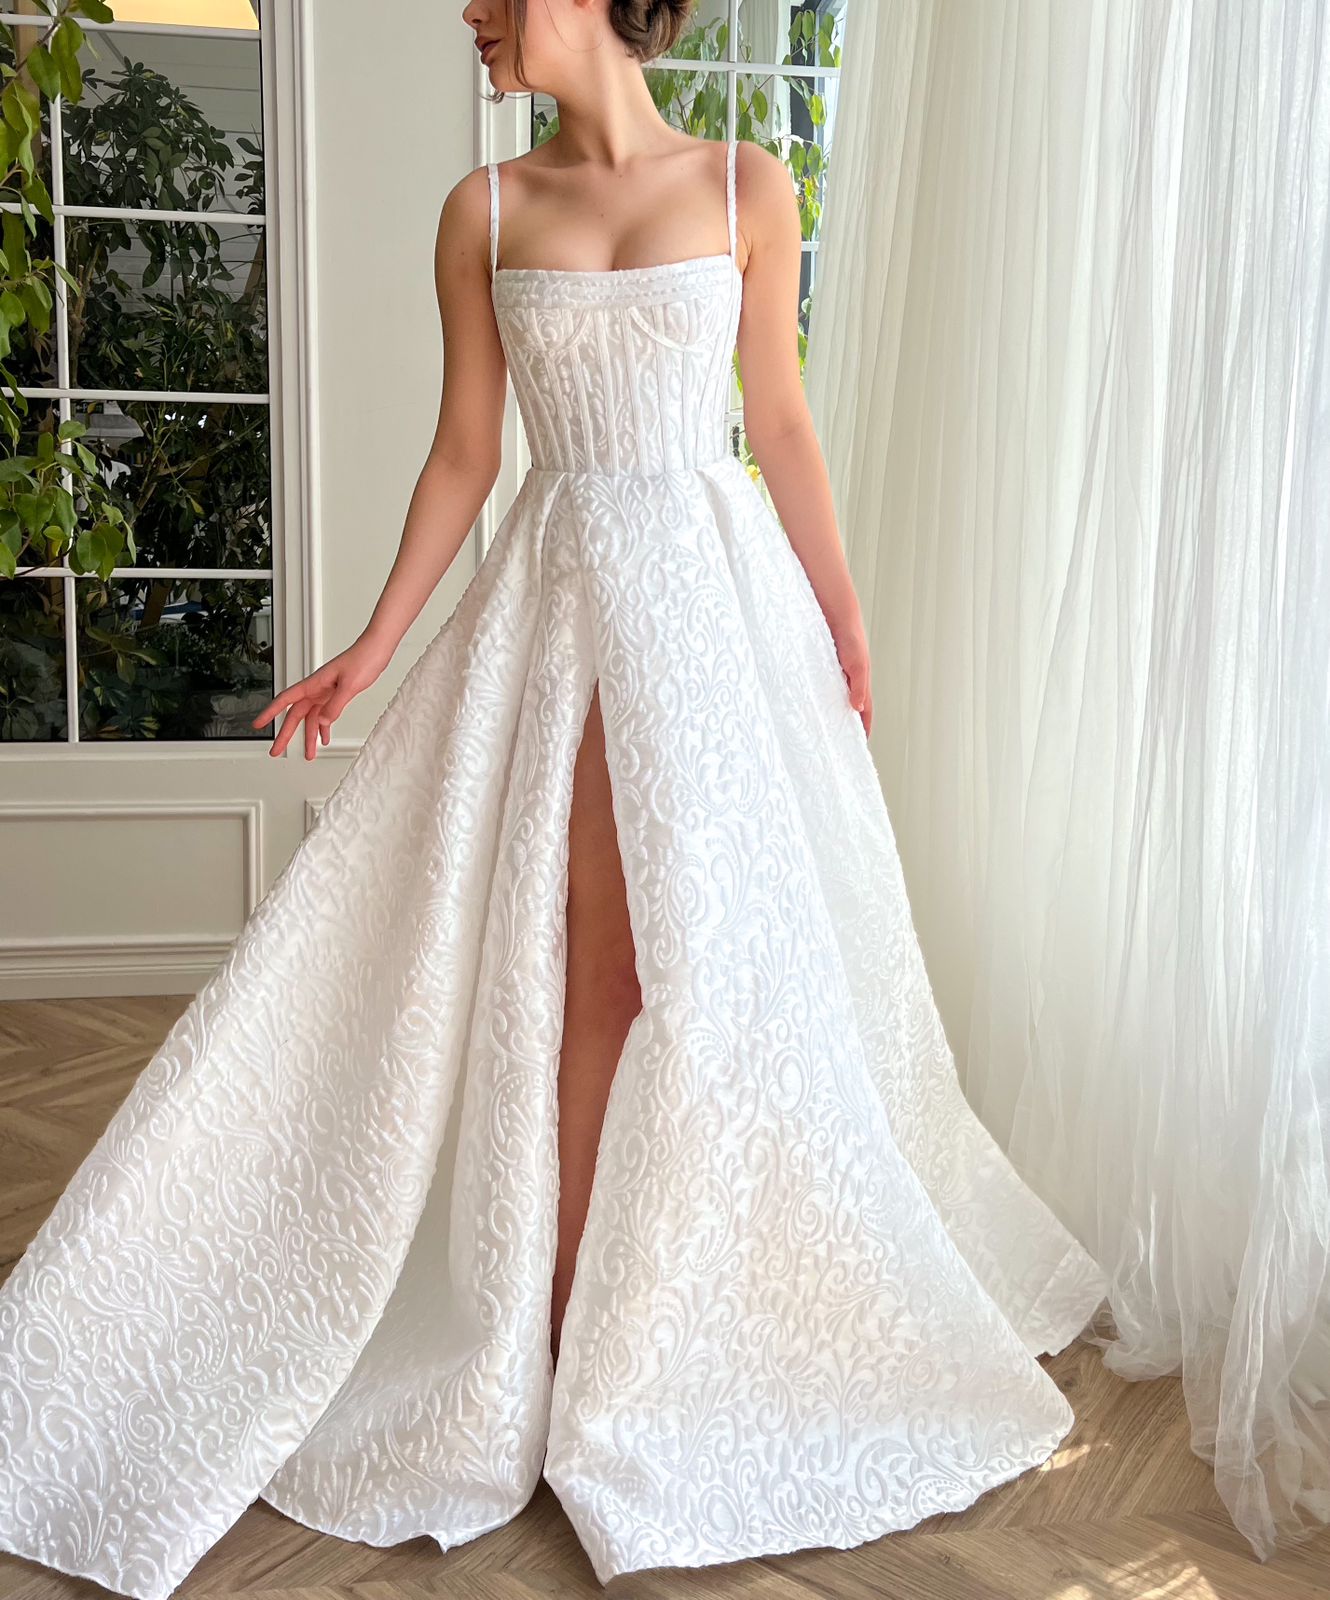 White A-Line bridal dress with spaghetti straps